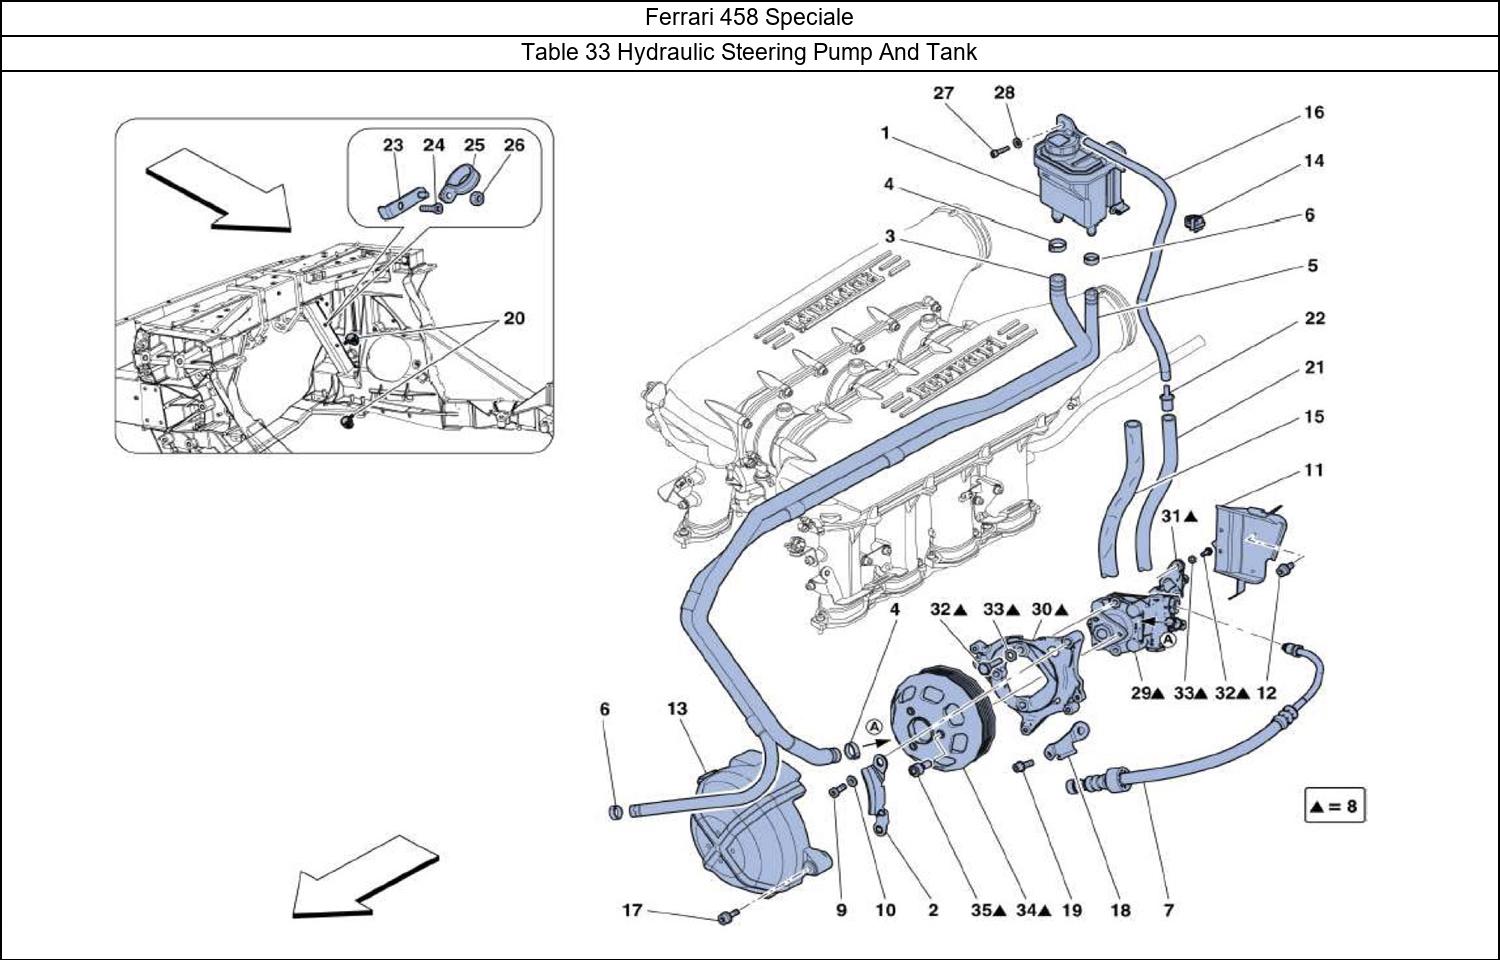 Ferrari Parts Ferrari 458 Speciale Table 33 Hydraulic Steering Pump And Tank